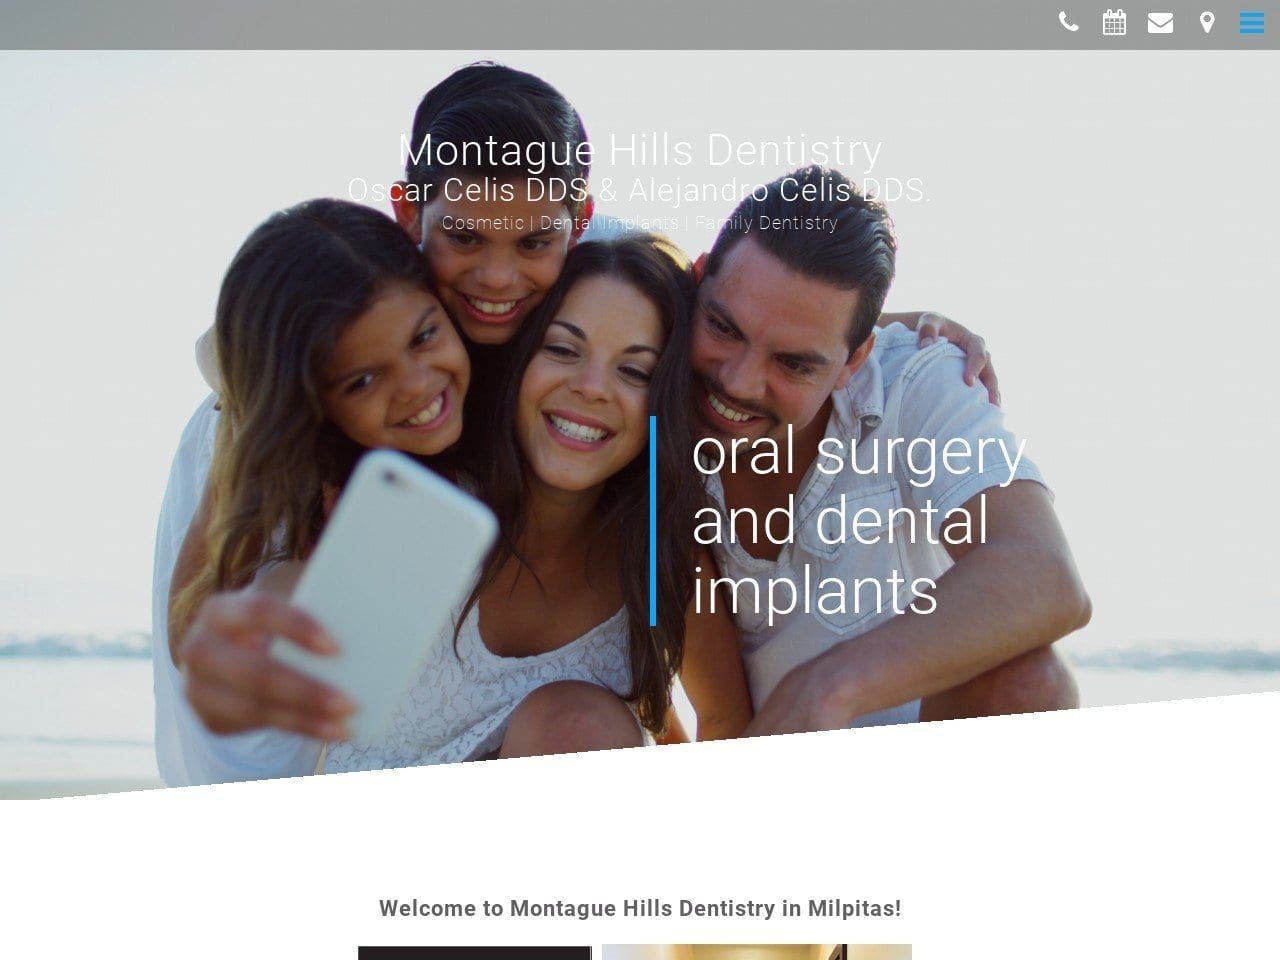 Mh Dentistry Website Screenshot from mhdentistry.com